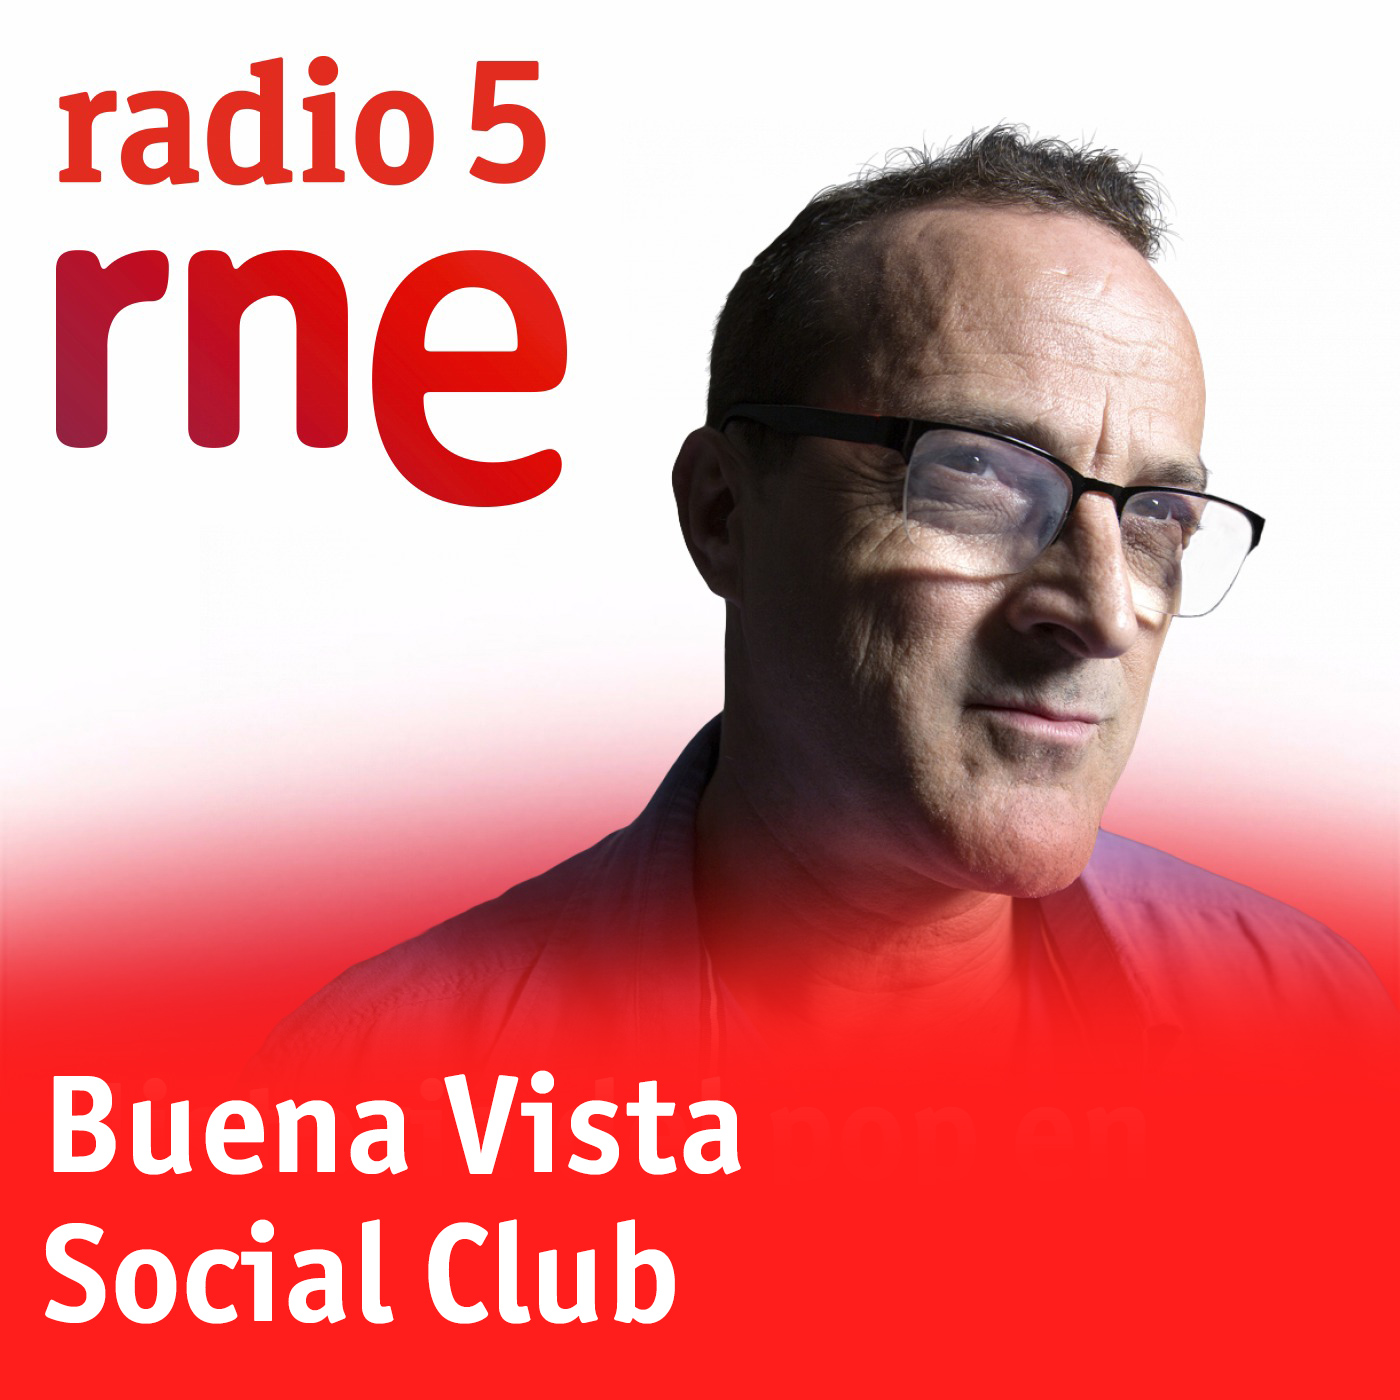 Buena Vista Social Club - Full album - YouTube